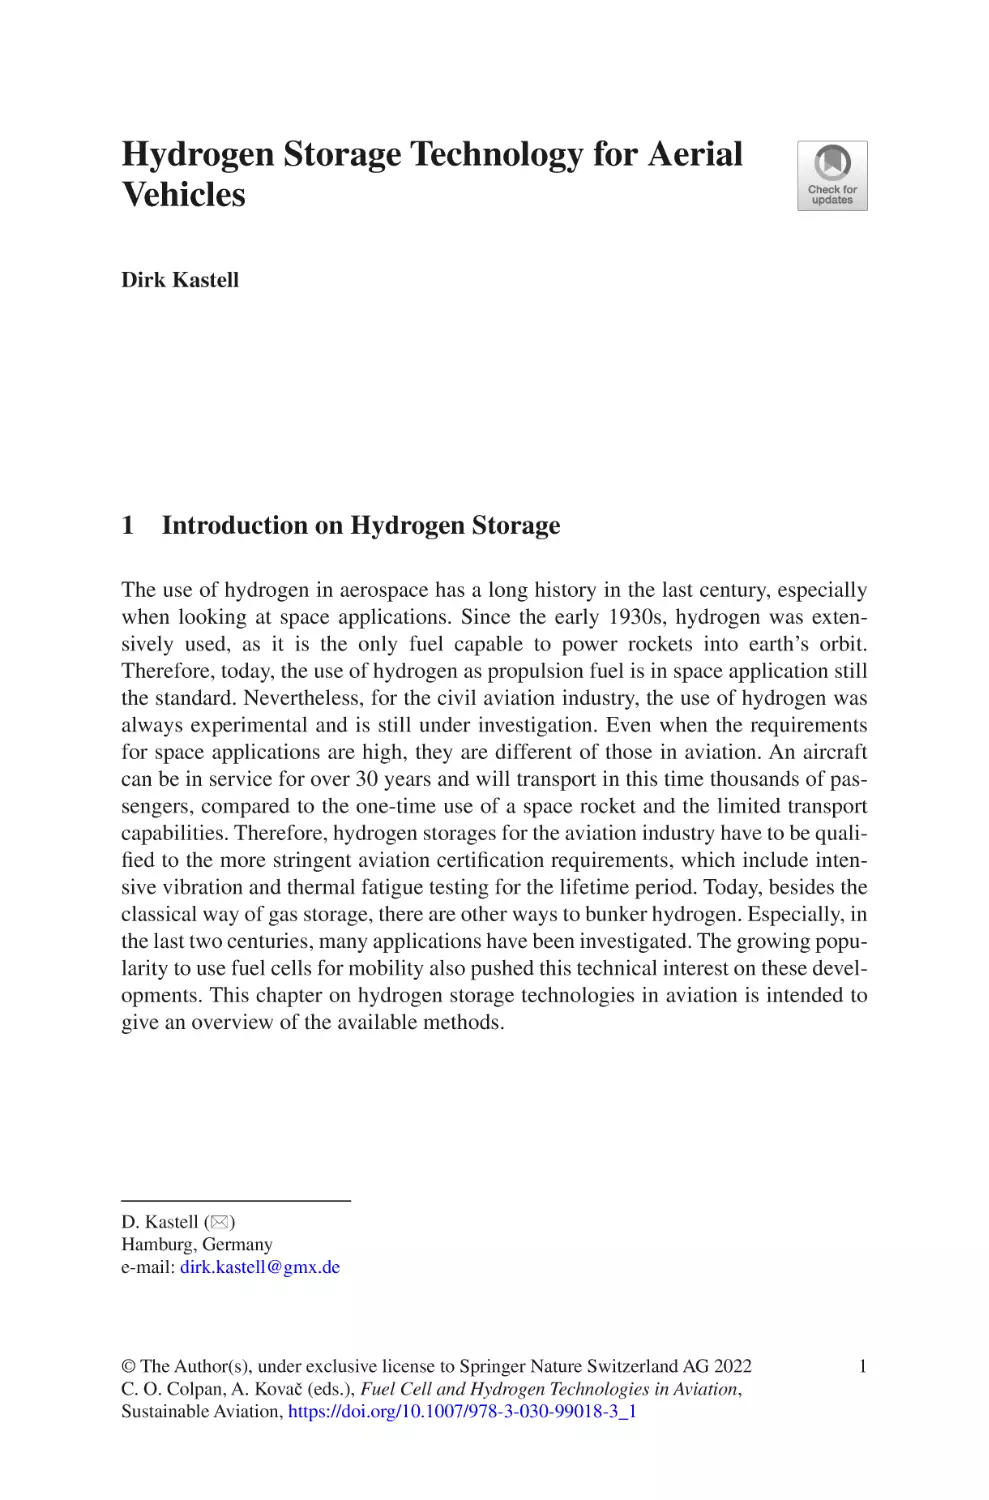 Hydrogen Storage Technology for Aerial Vehicles
1 Introduction on Hydrogen Storage